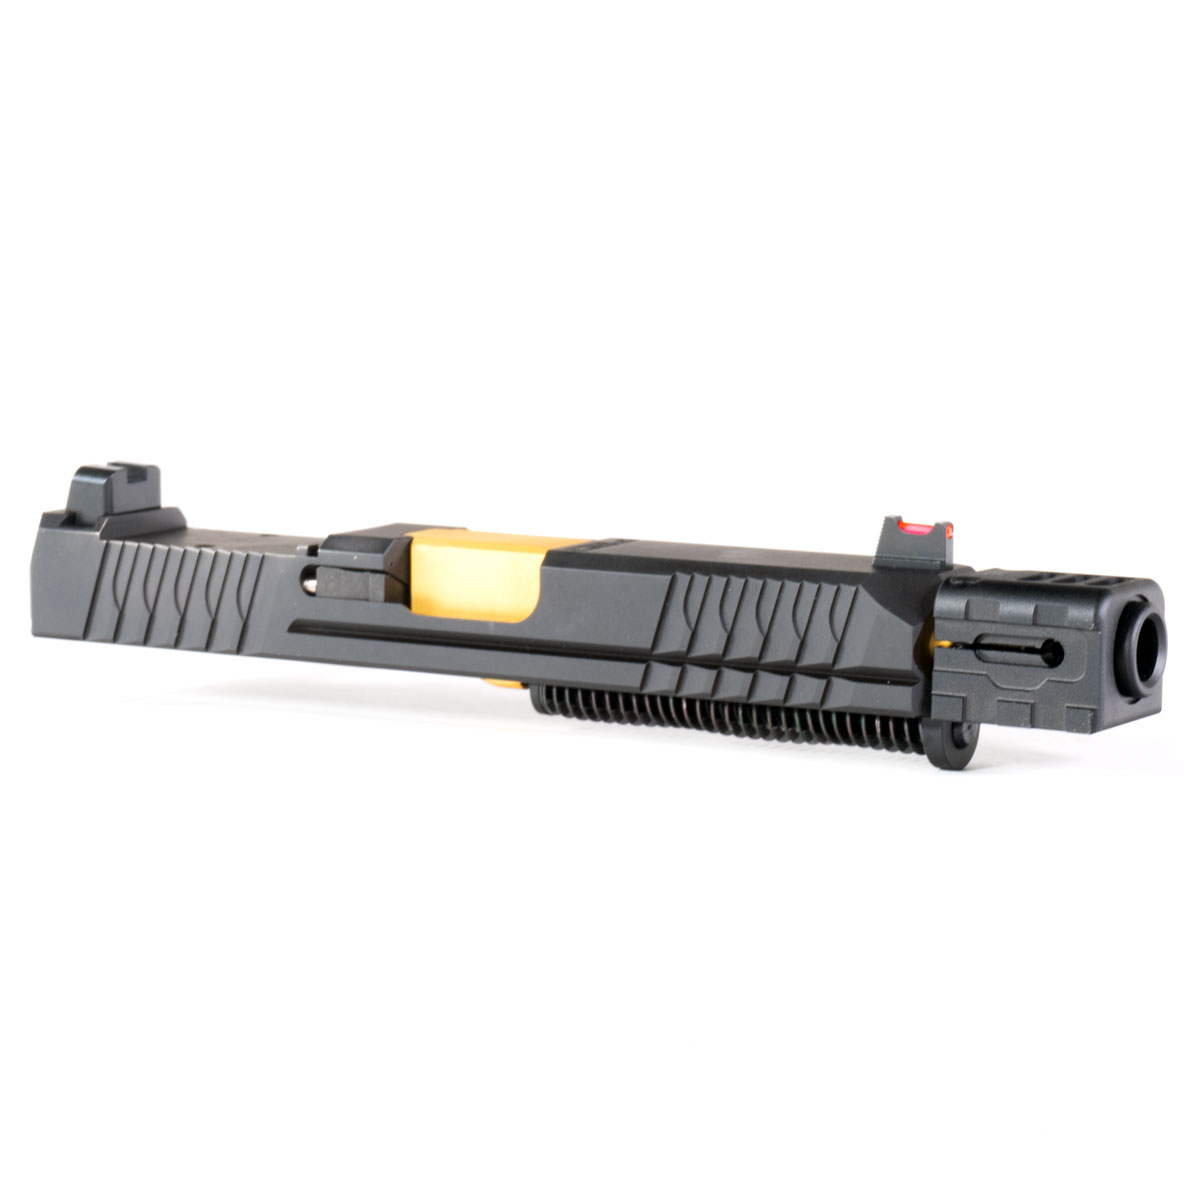 DD 'Patlama w/ Sylvan Arms Compensator' 9mm Complete Slide Kit - Glock 19 Gen 1-3 Compatible